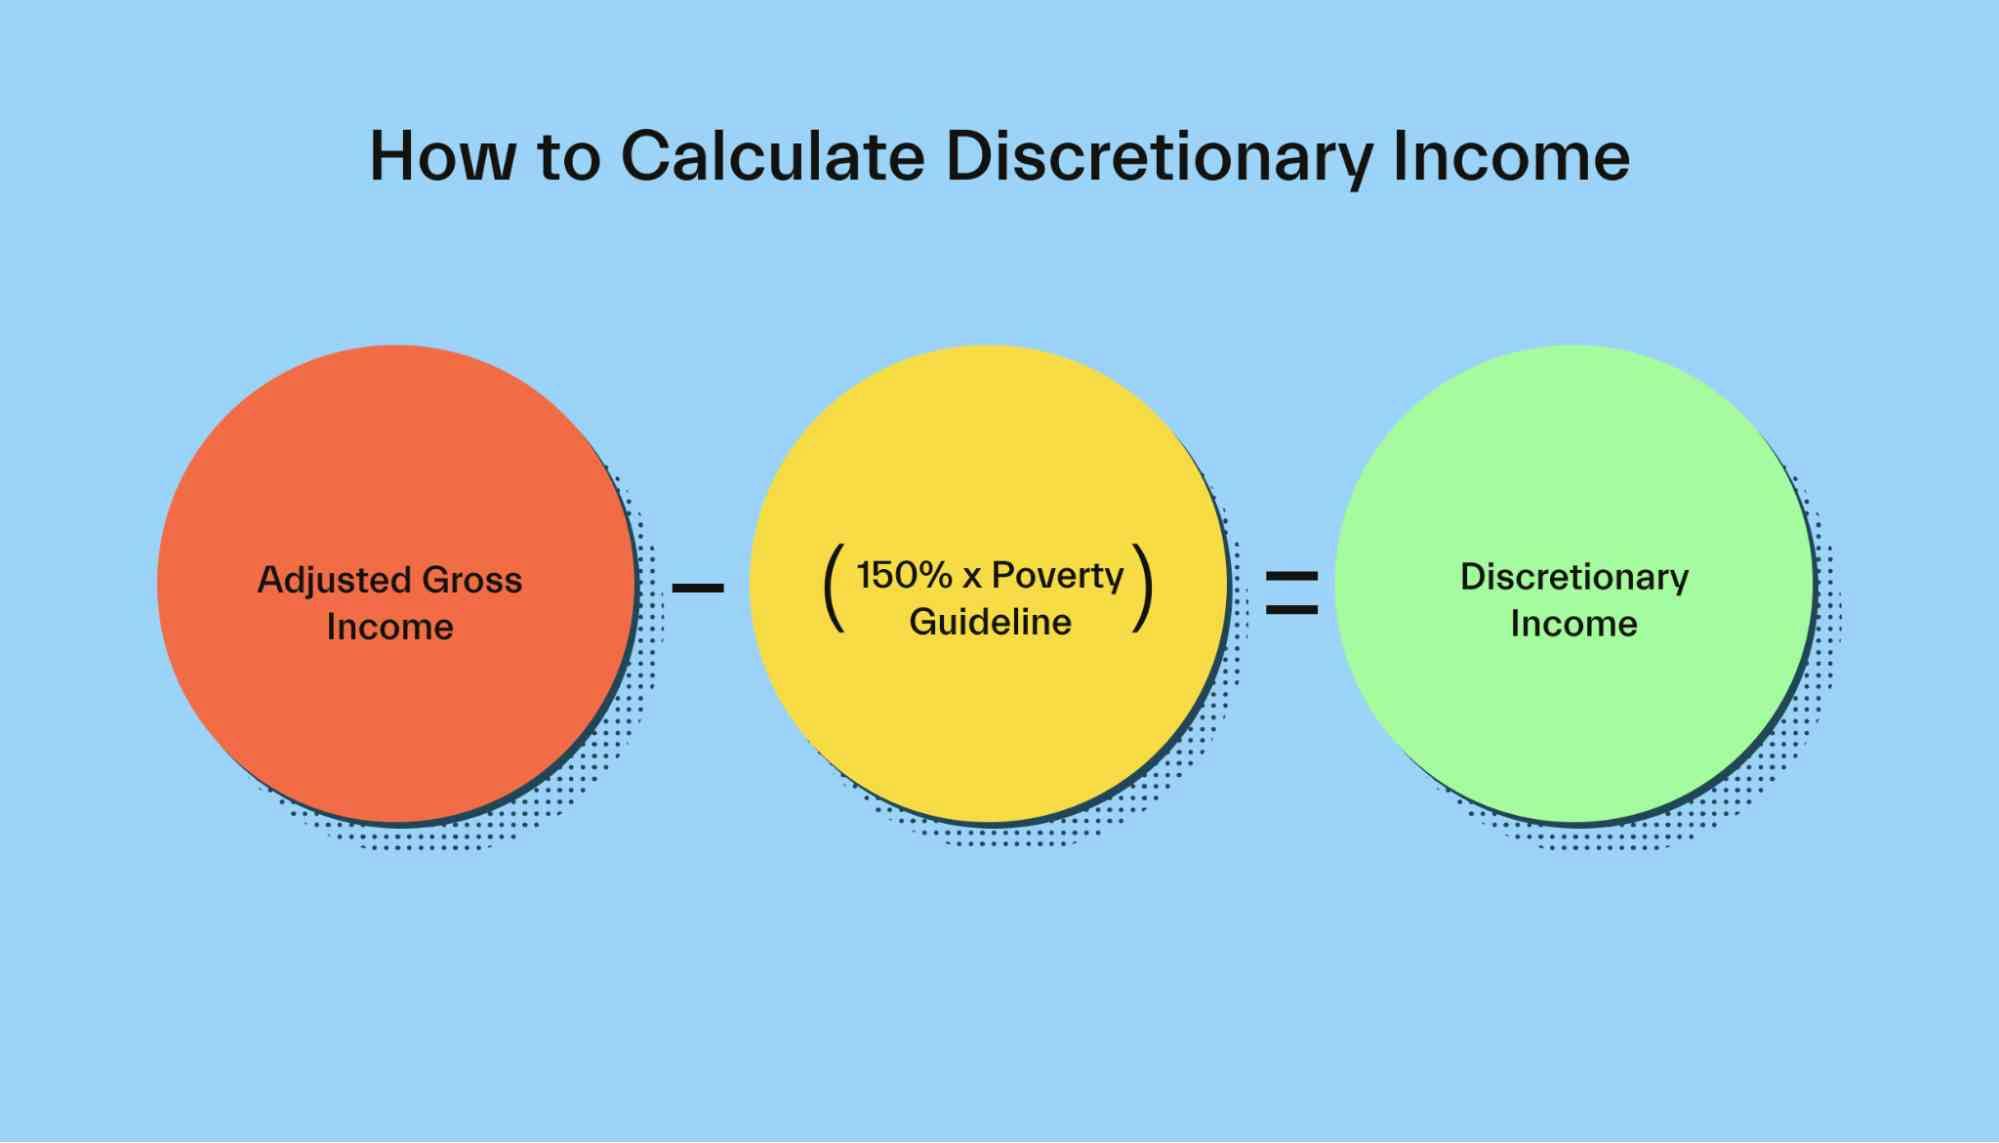 Discretionary income uses 